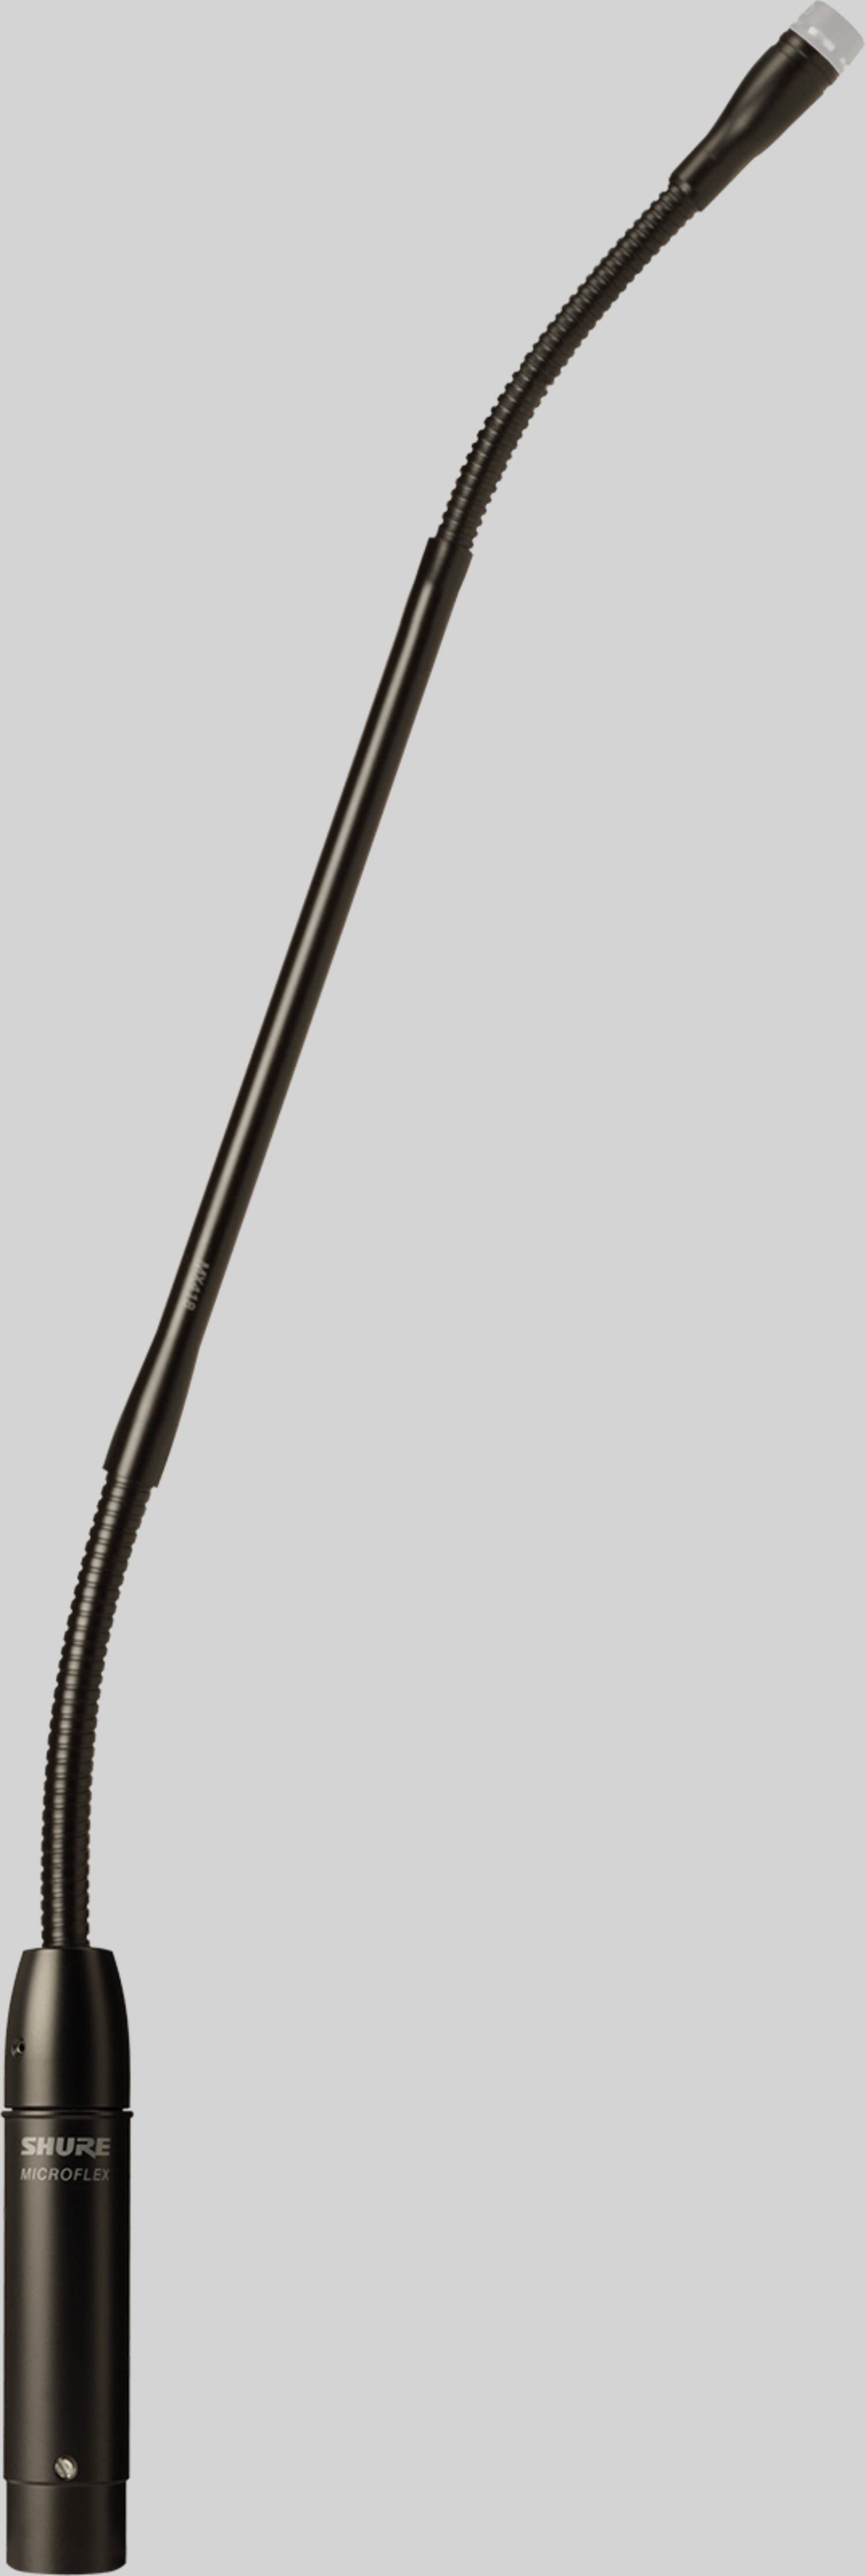 MX412 - Microflex® Standard Gooseneck Microphone